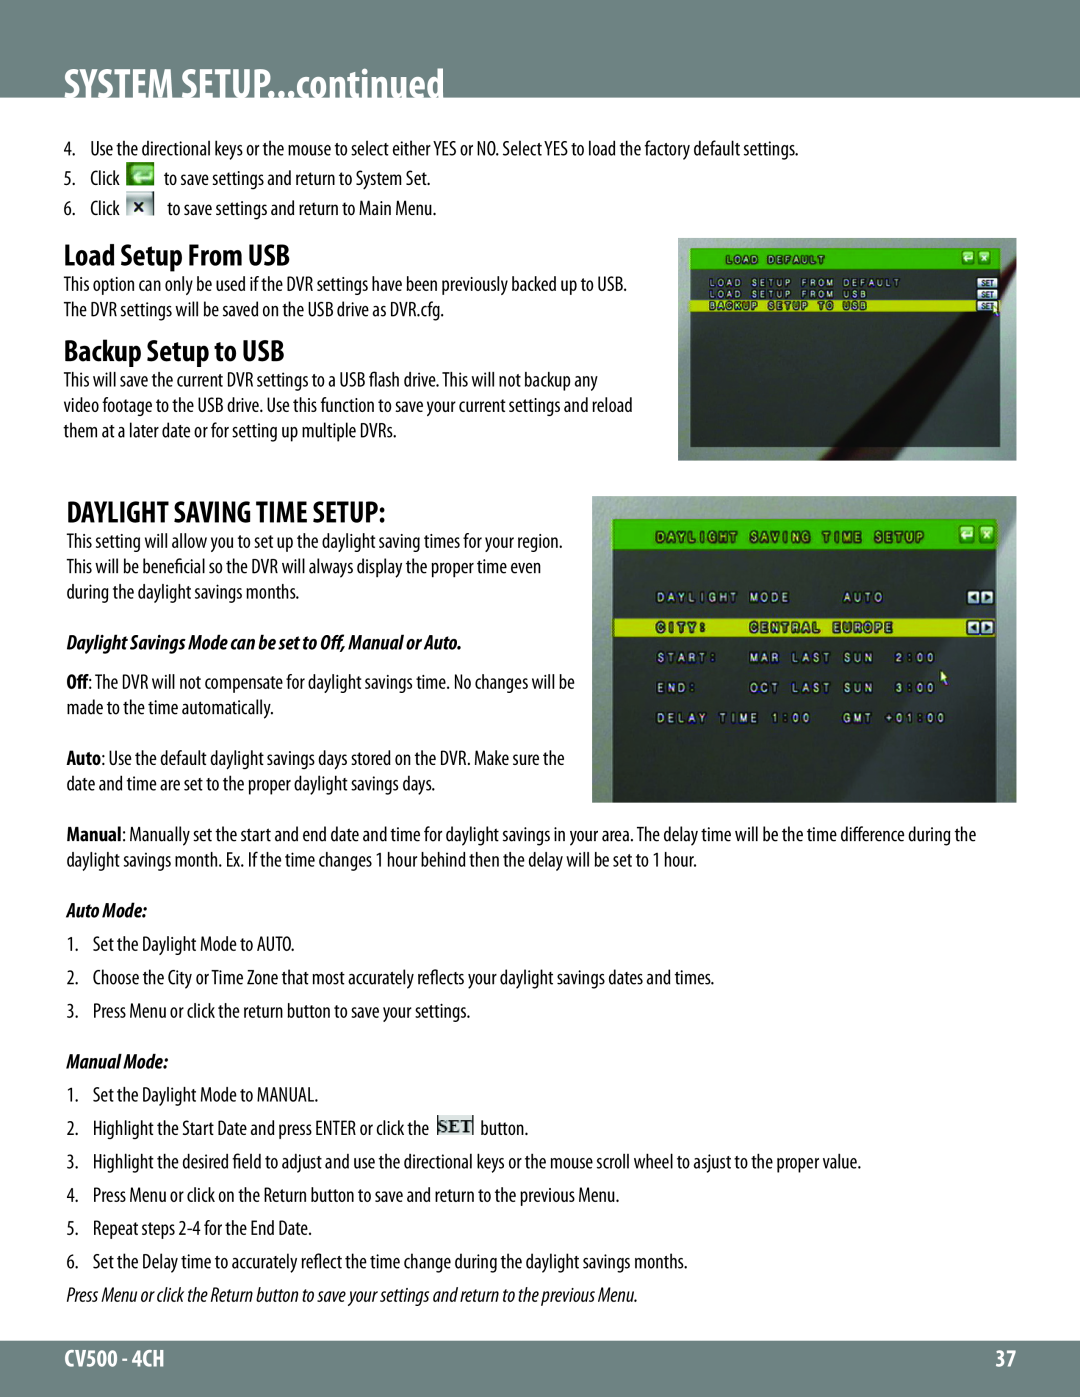 SVAT Electronics 2CV500 - 4CH Load Setup From USB, Backup Setup to USB, Daylight Saving Time Setup, Auto Mode, Manual Mode 